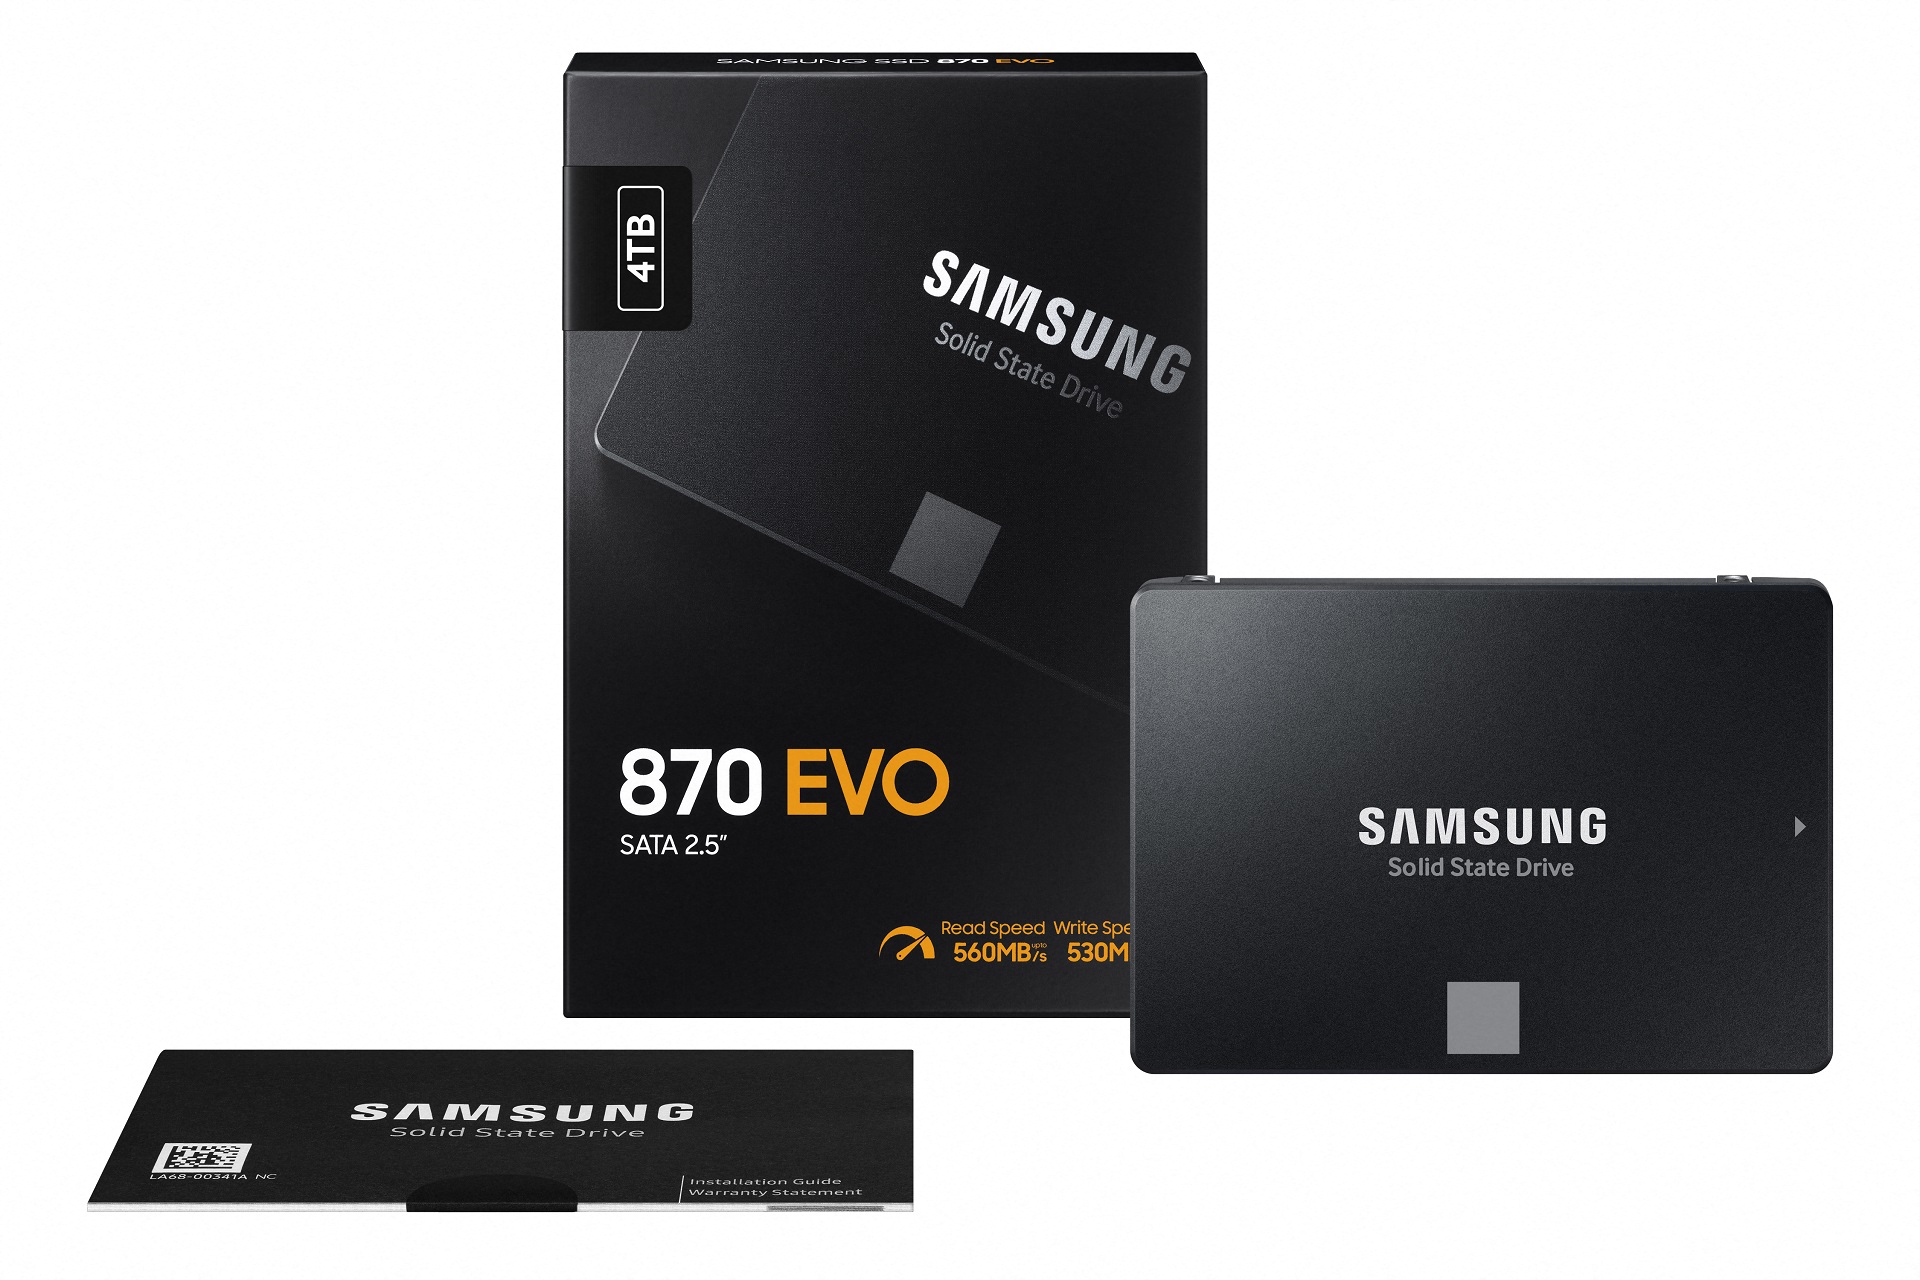 Samsung 870 EVO SSD price, availability announced for